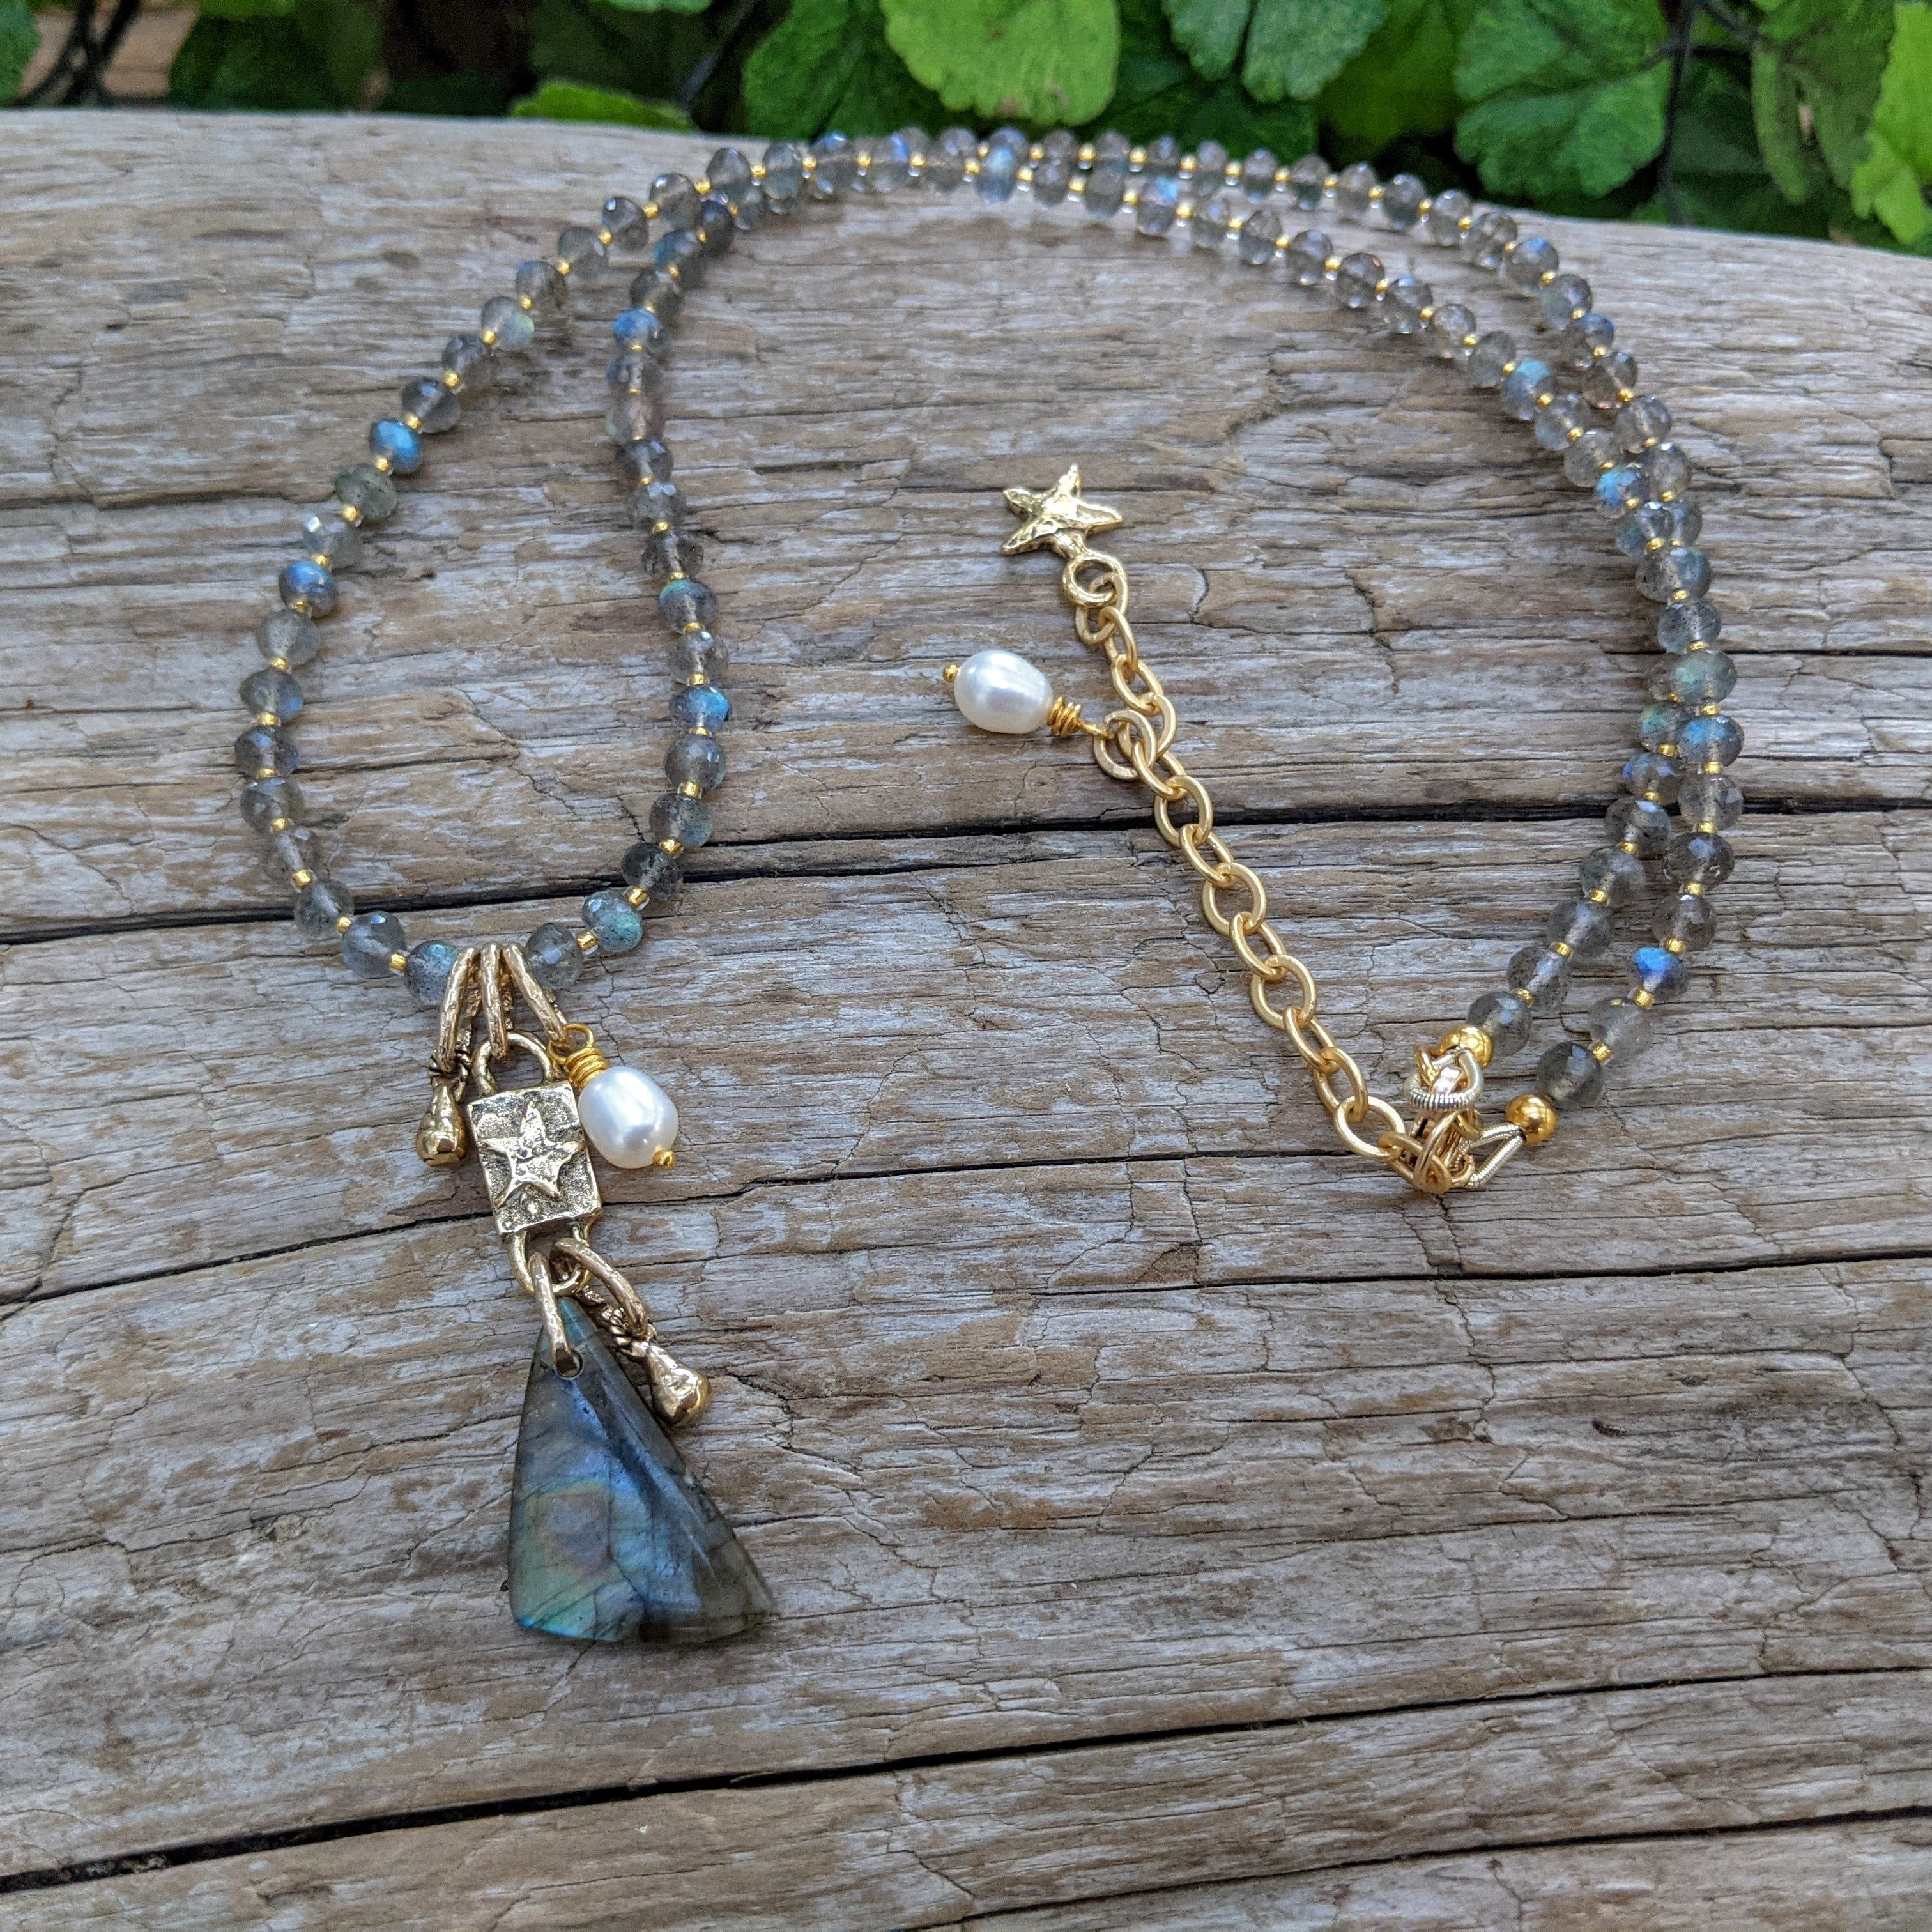 Labradorite creative necklace, Artisan necklace, boho necklace, artistic necklace, bohemian jewelry, handcrafted by Aurora Creative Jewellery.